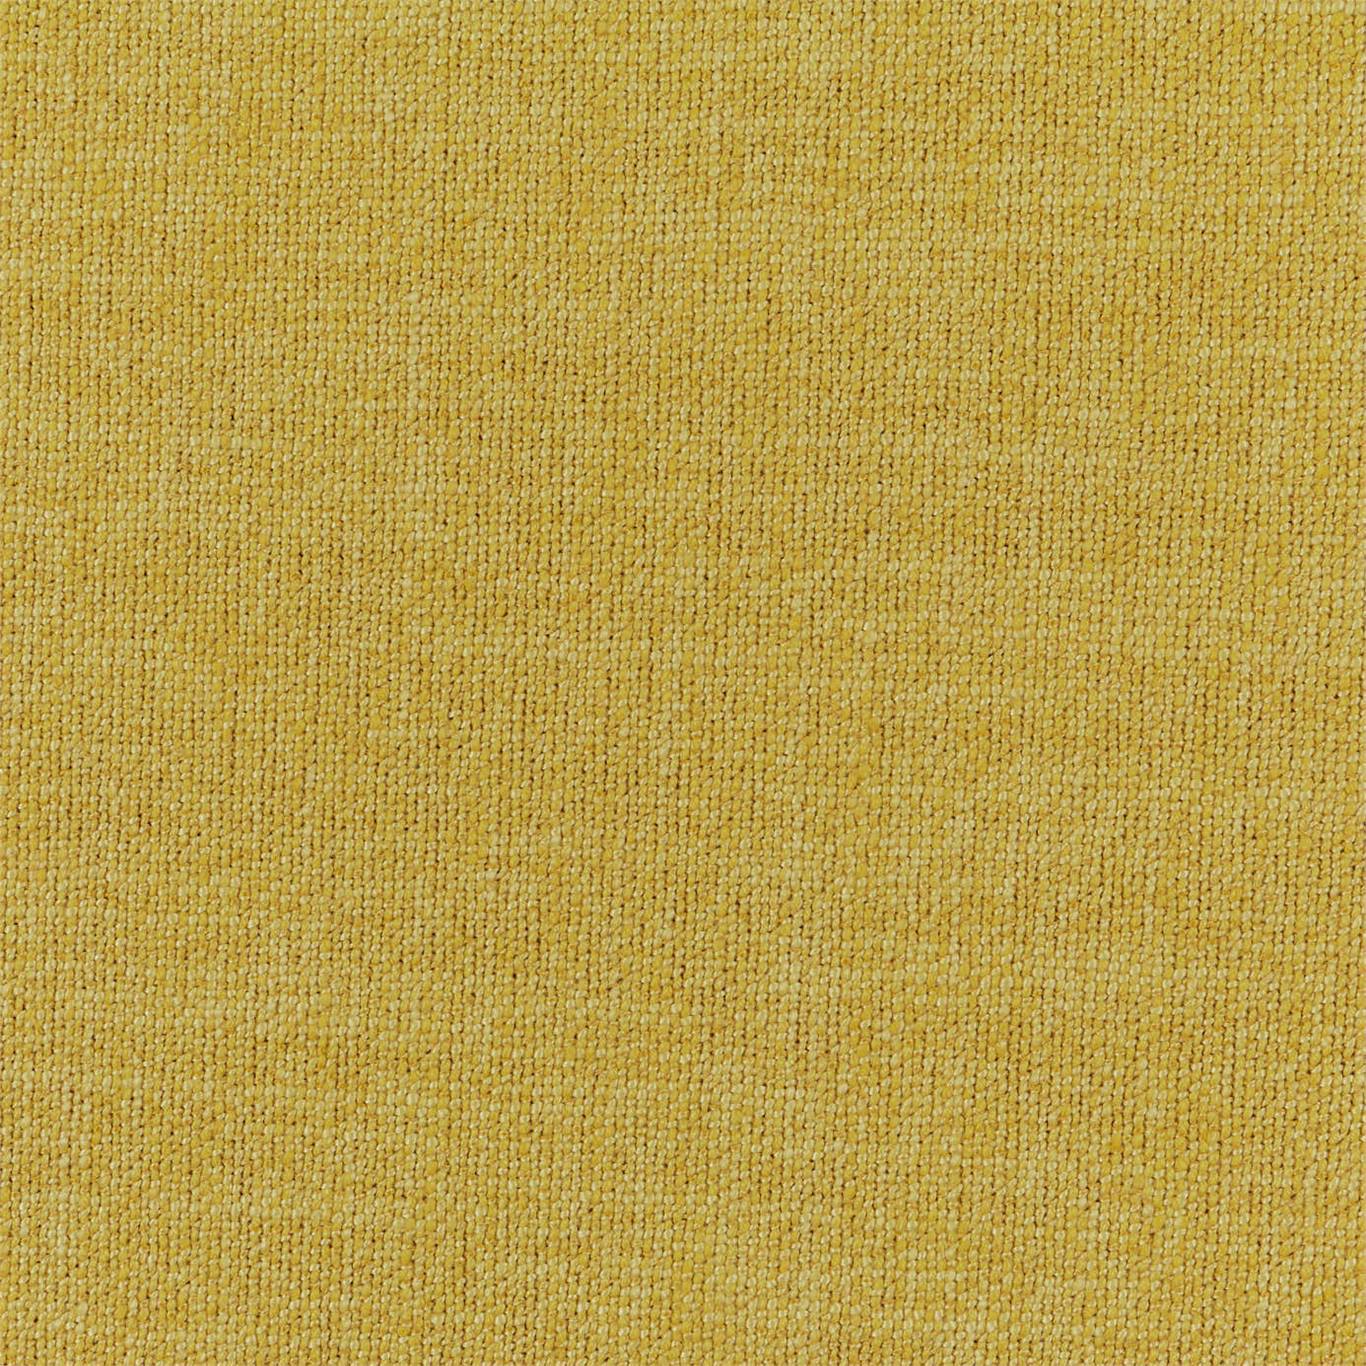 Subject Sunflower Fabric by HAR